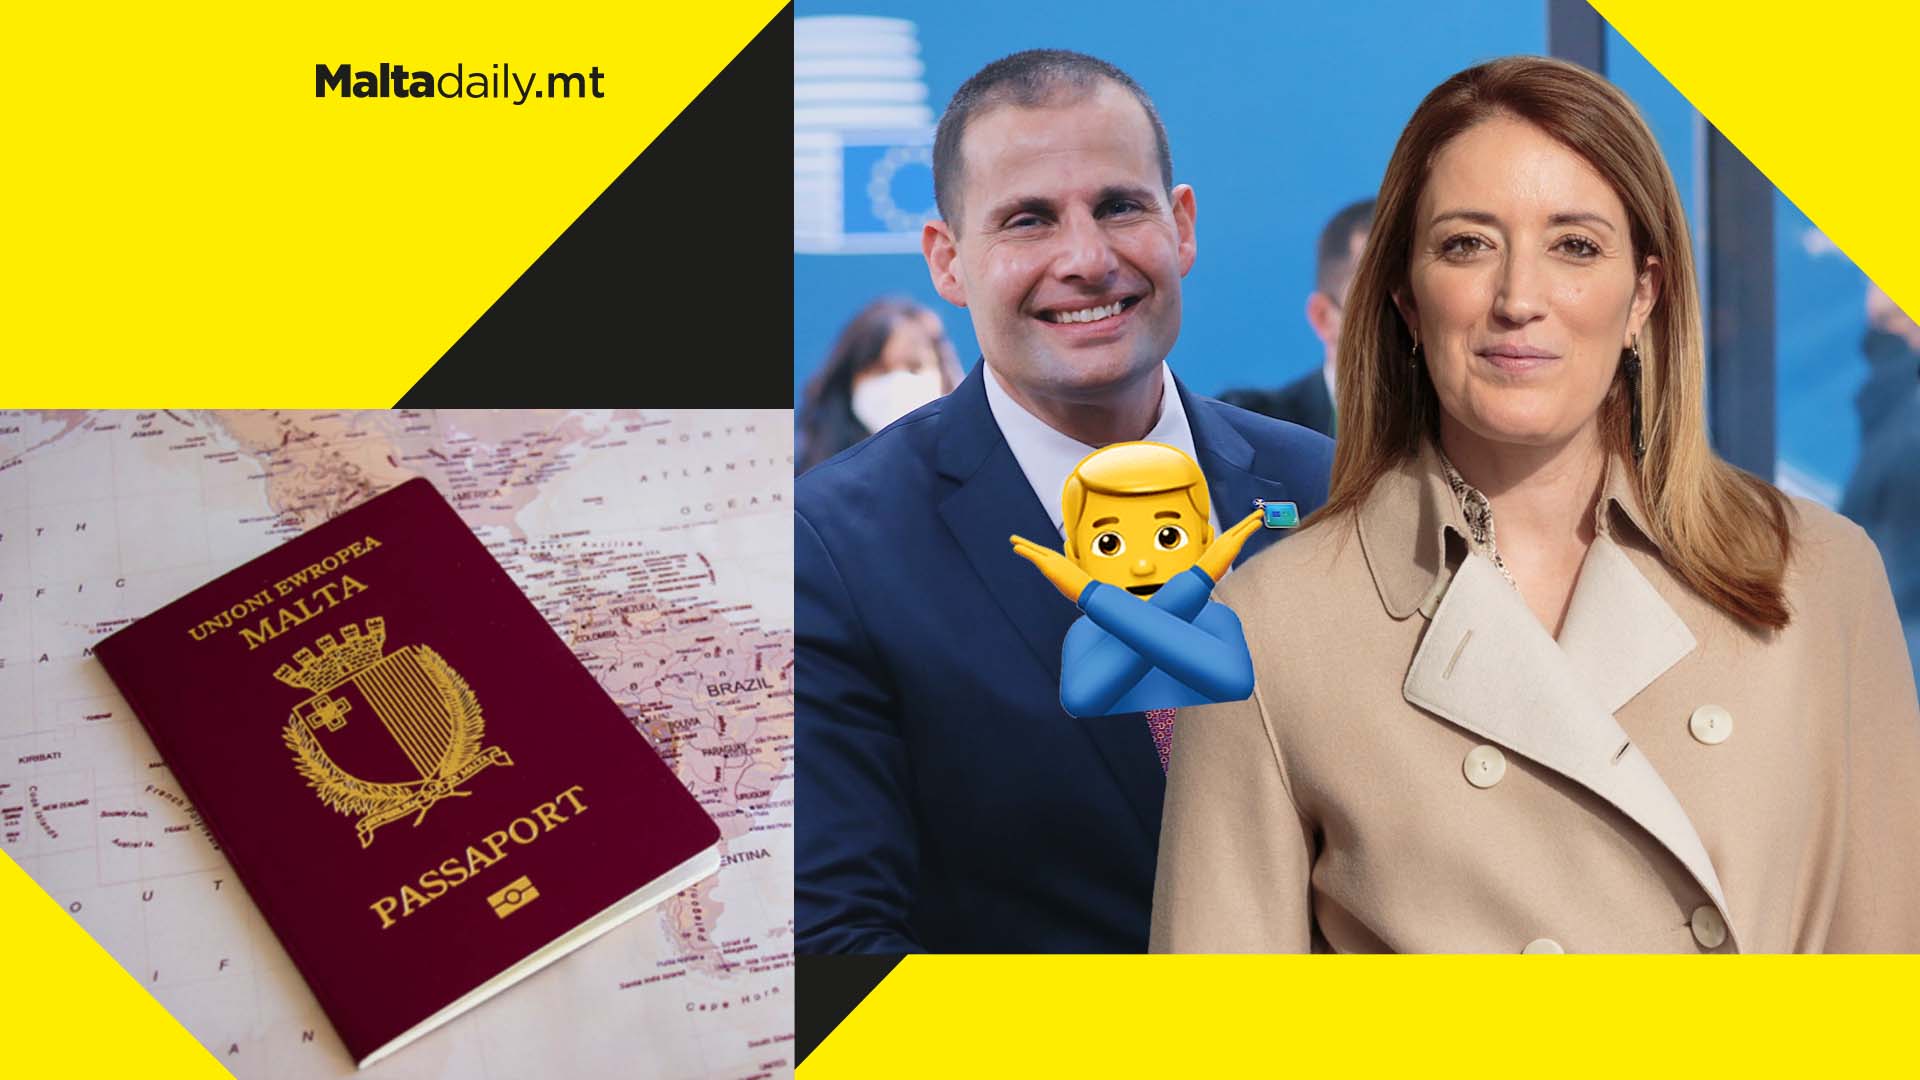 Malta will not its halt 'golden passport' scheme despite Metsola's calls to 'close loopholes'